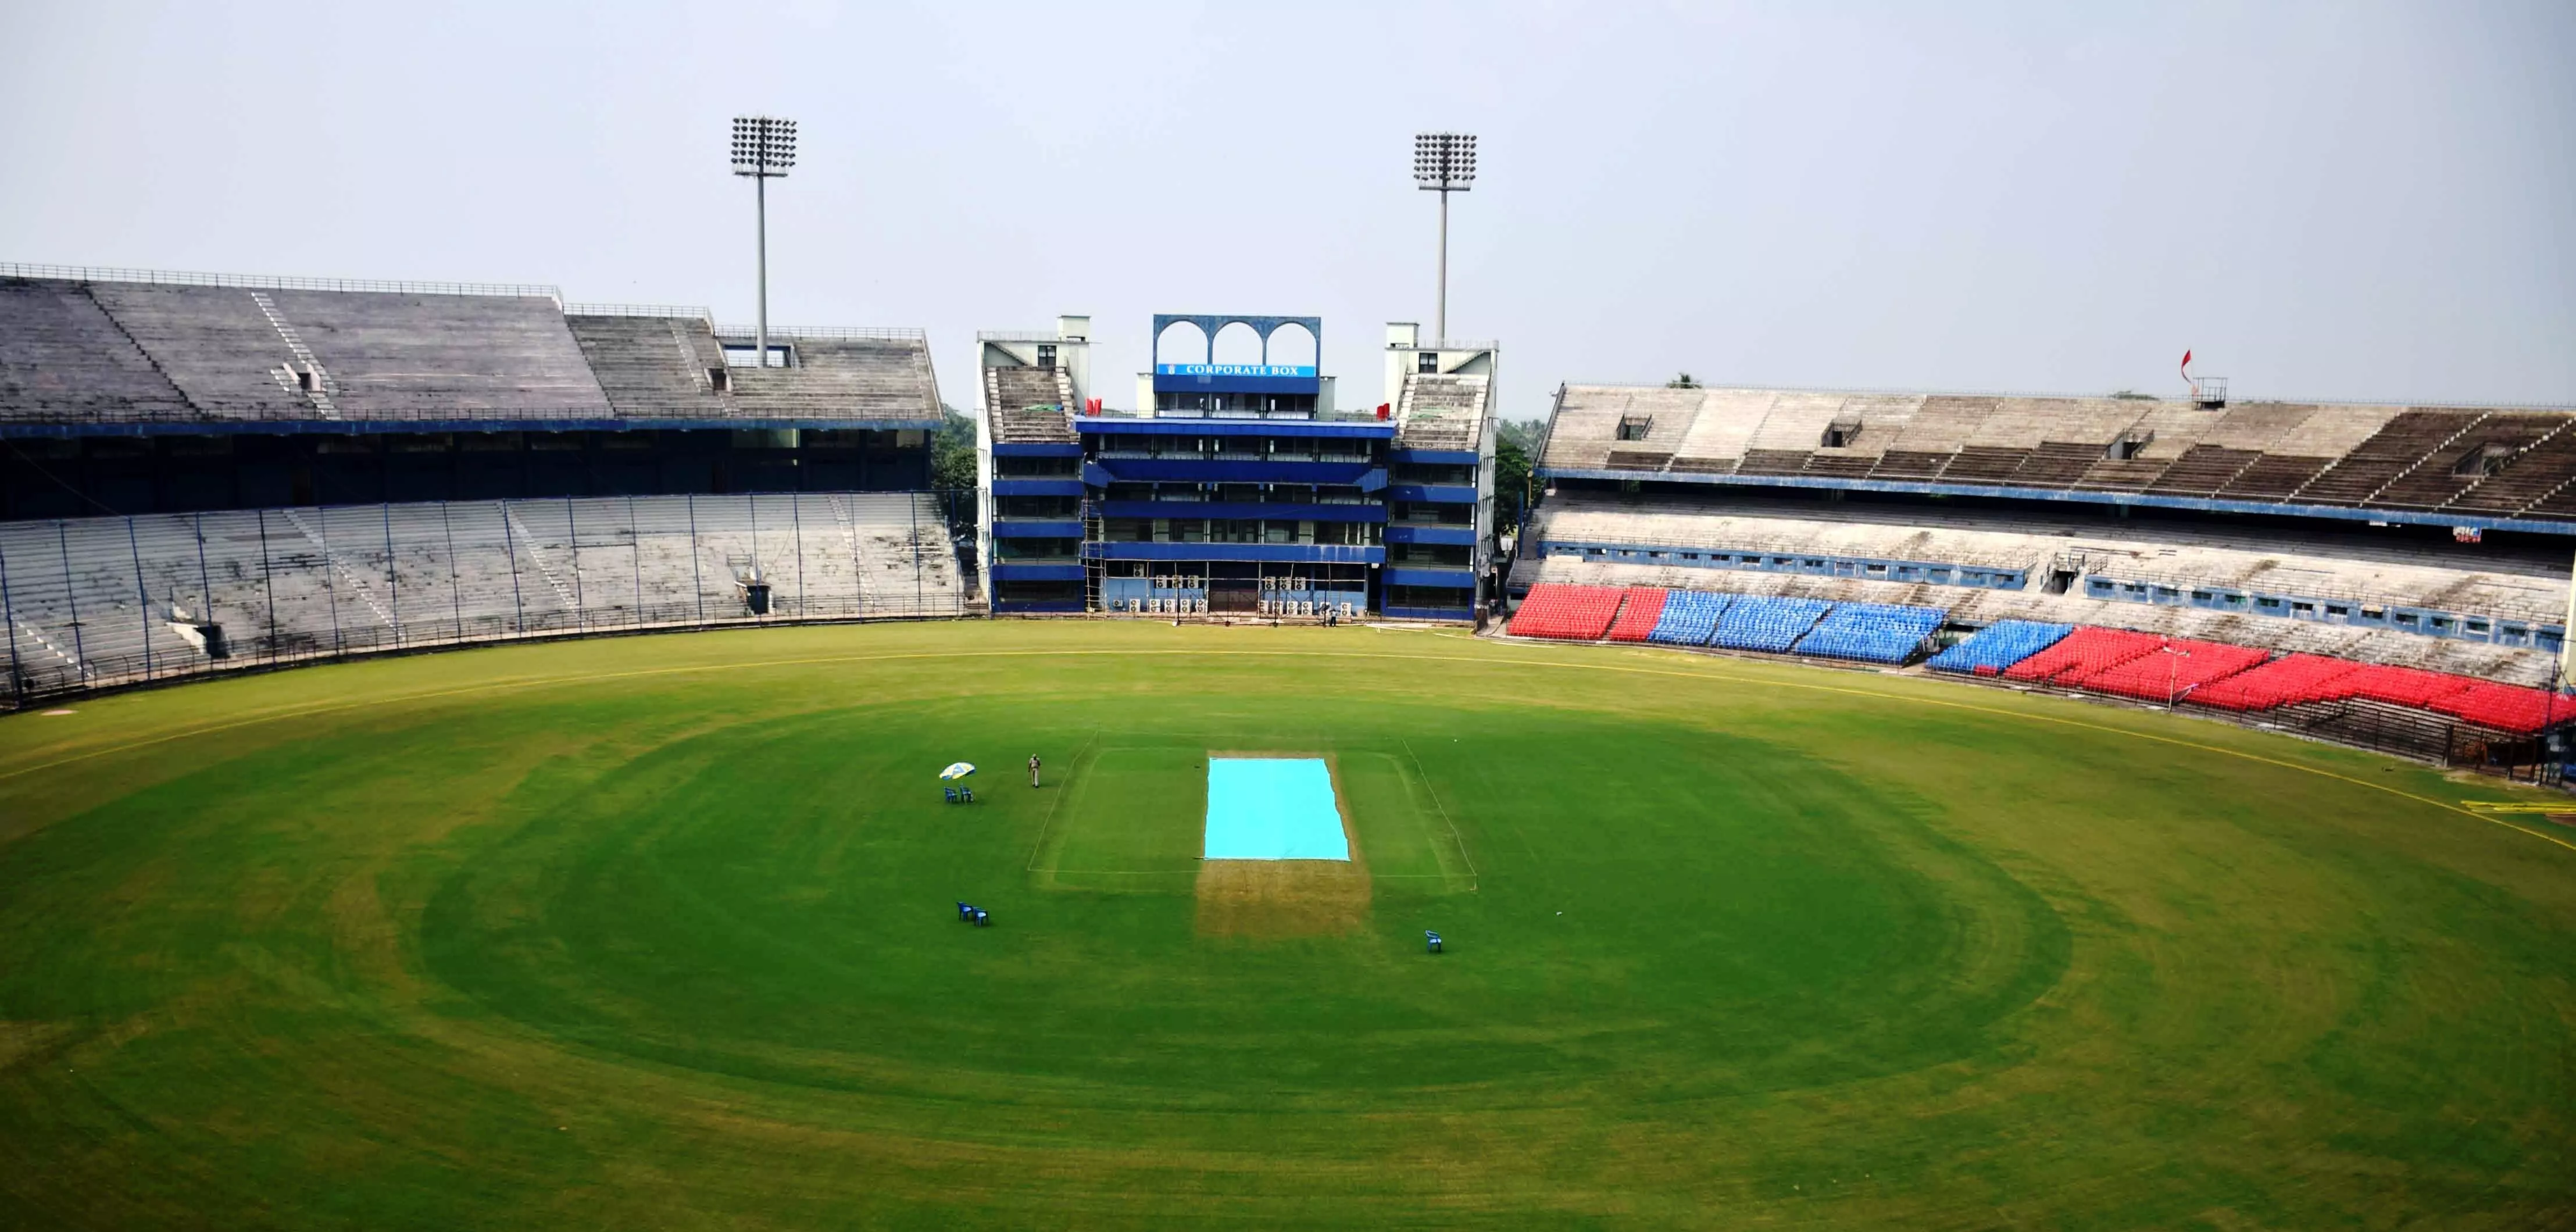 Barabati Stadium in India, Central Asia | Football,Cricket - Rated 6.3